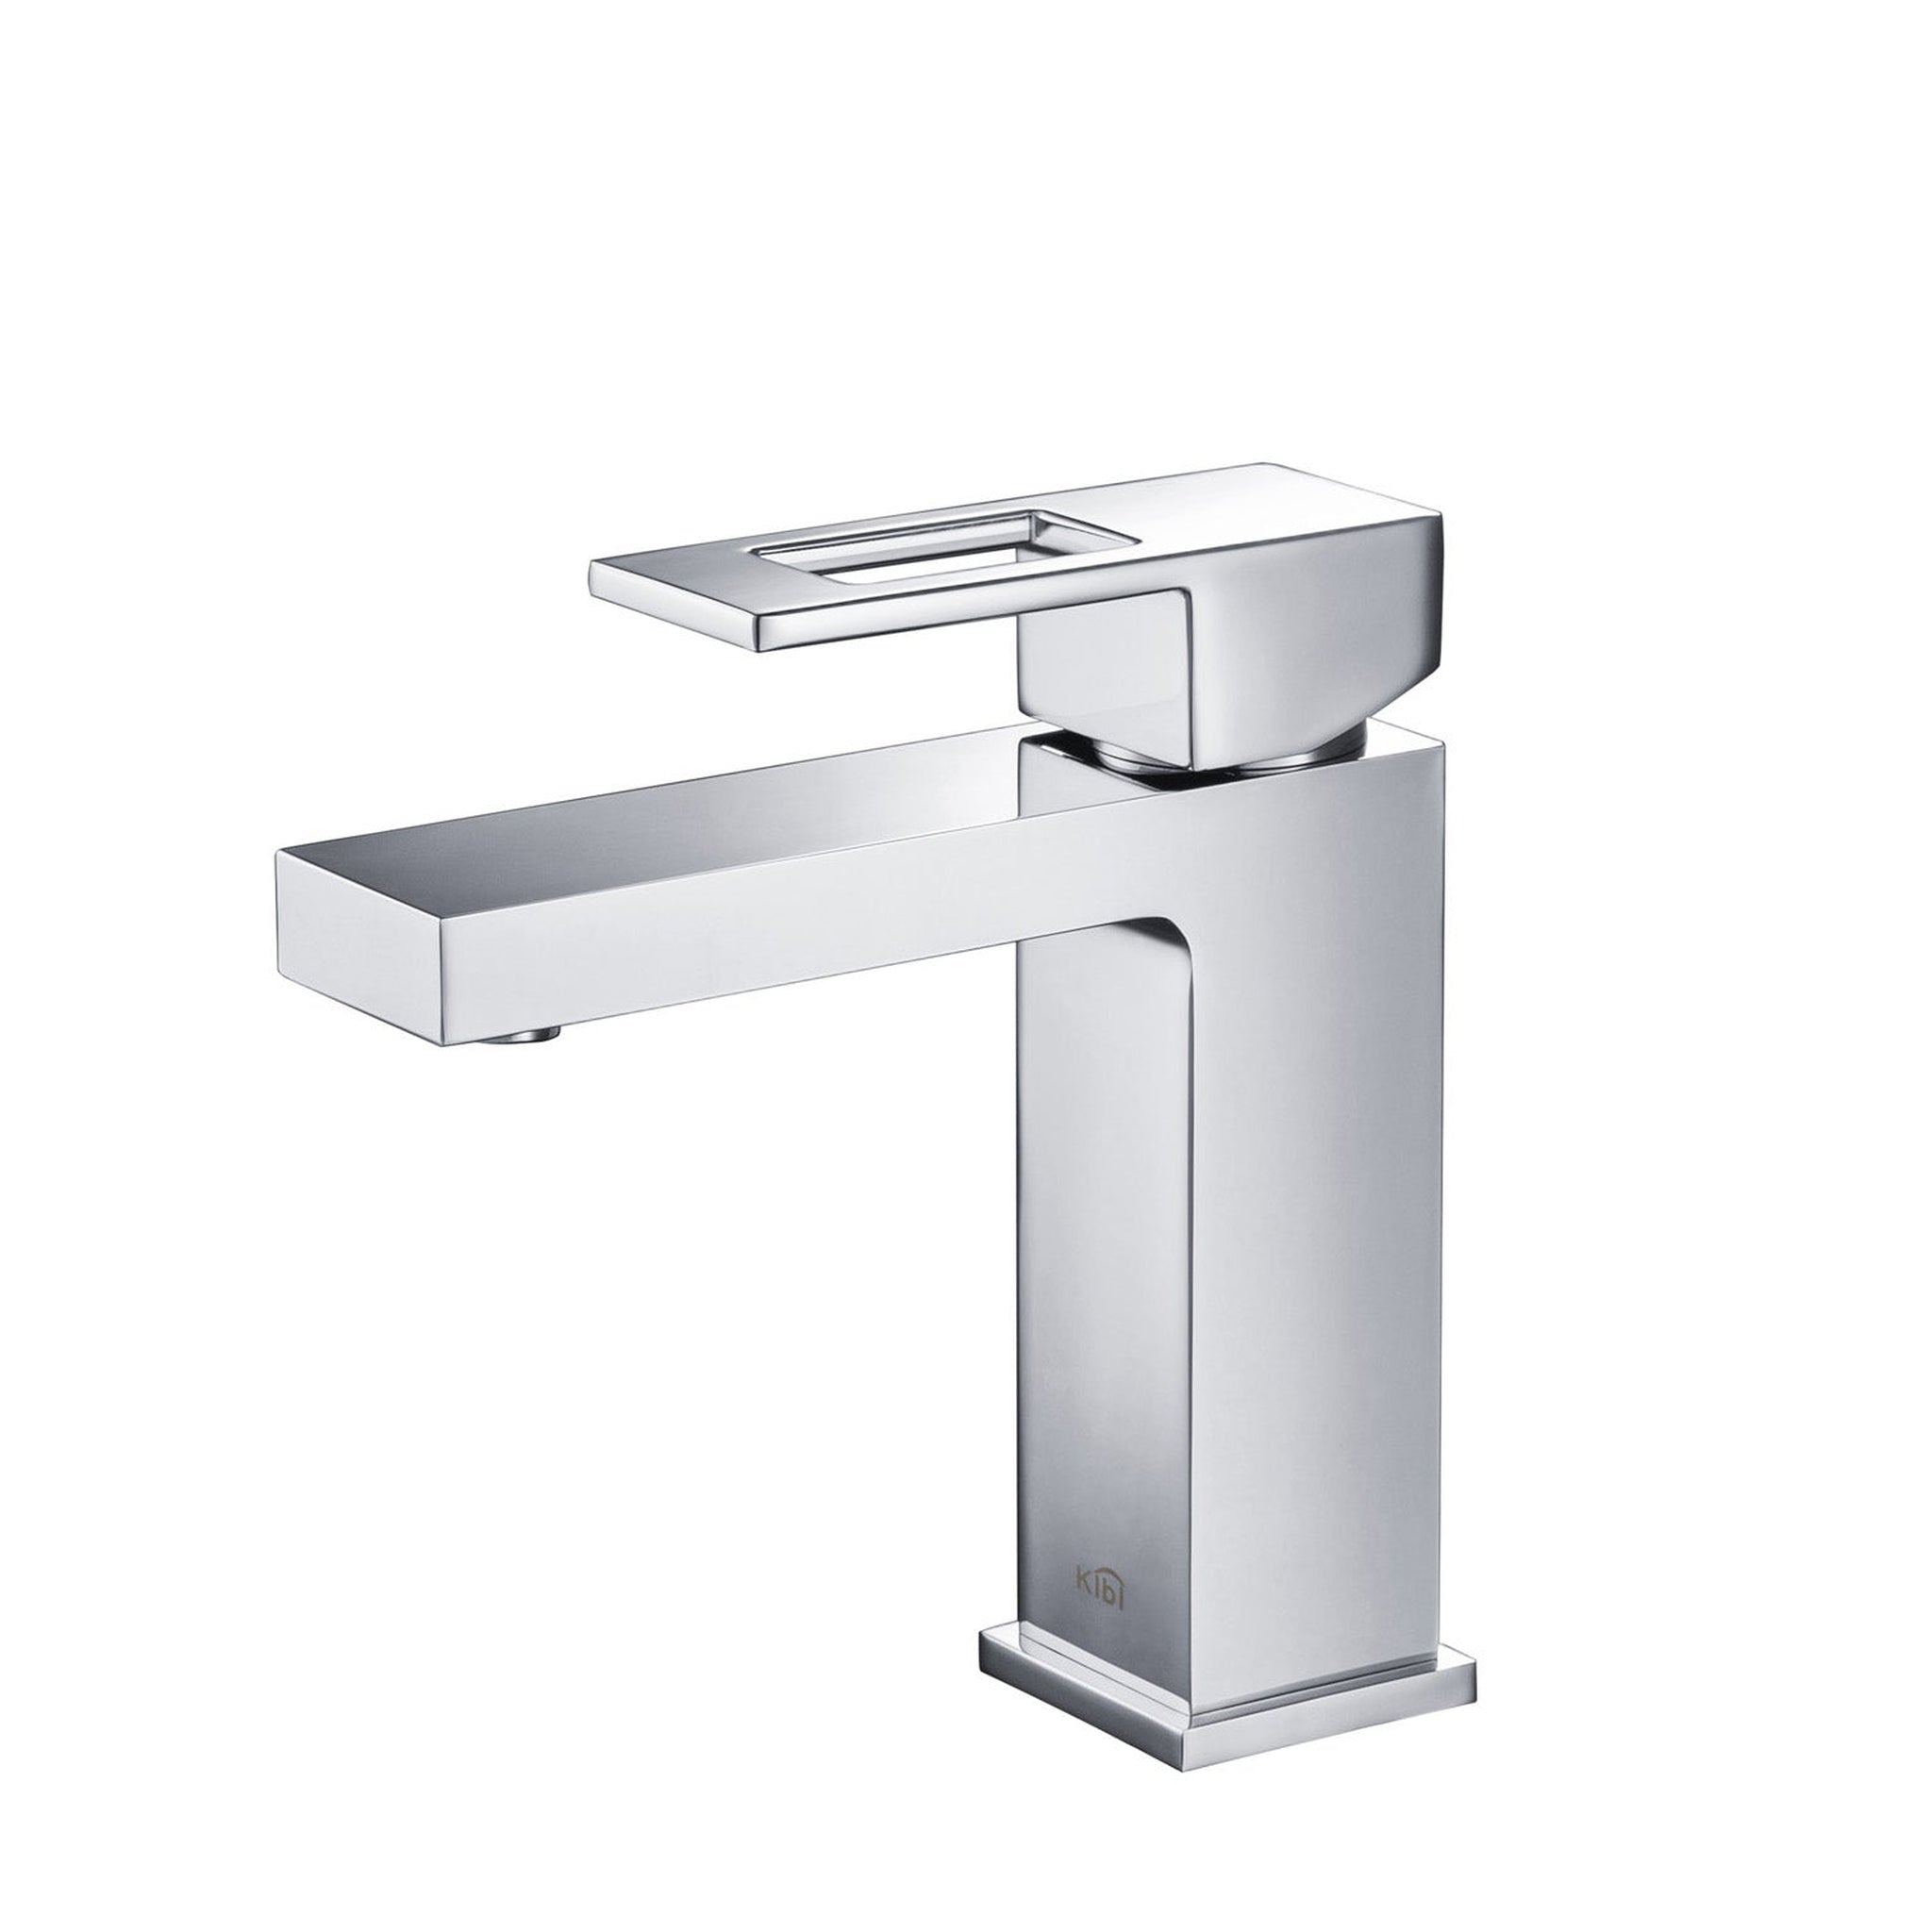 KIBI, KIBI Cubic Single Handle Chrome Solid Brass Bathroom Vanity Sink Faucet